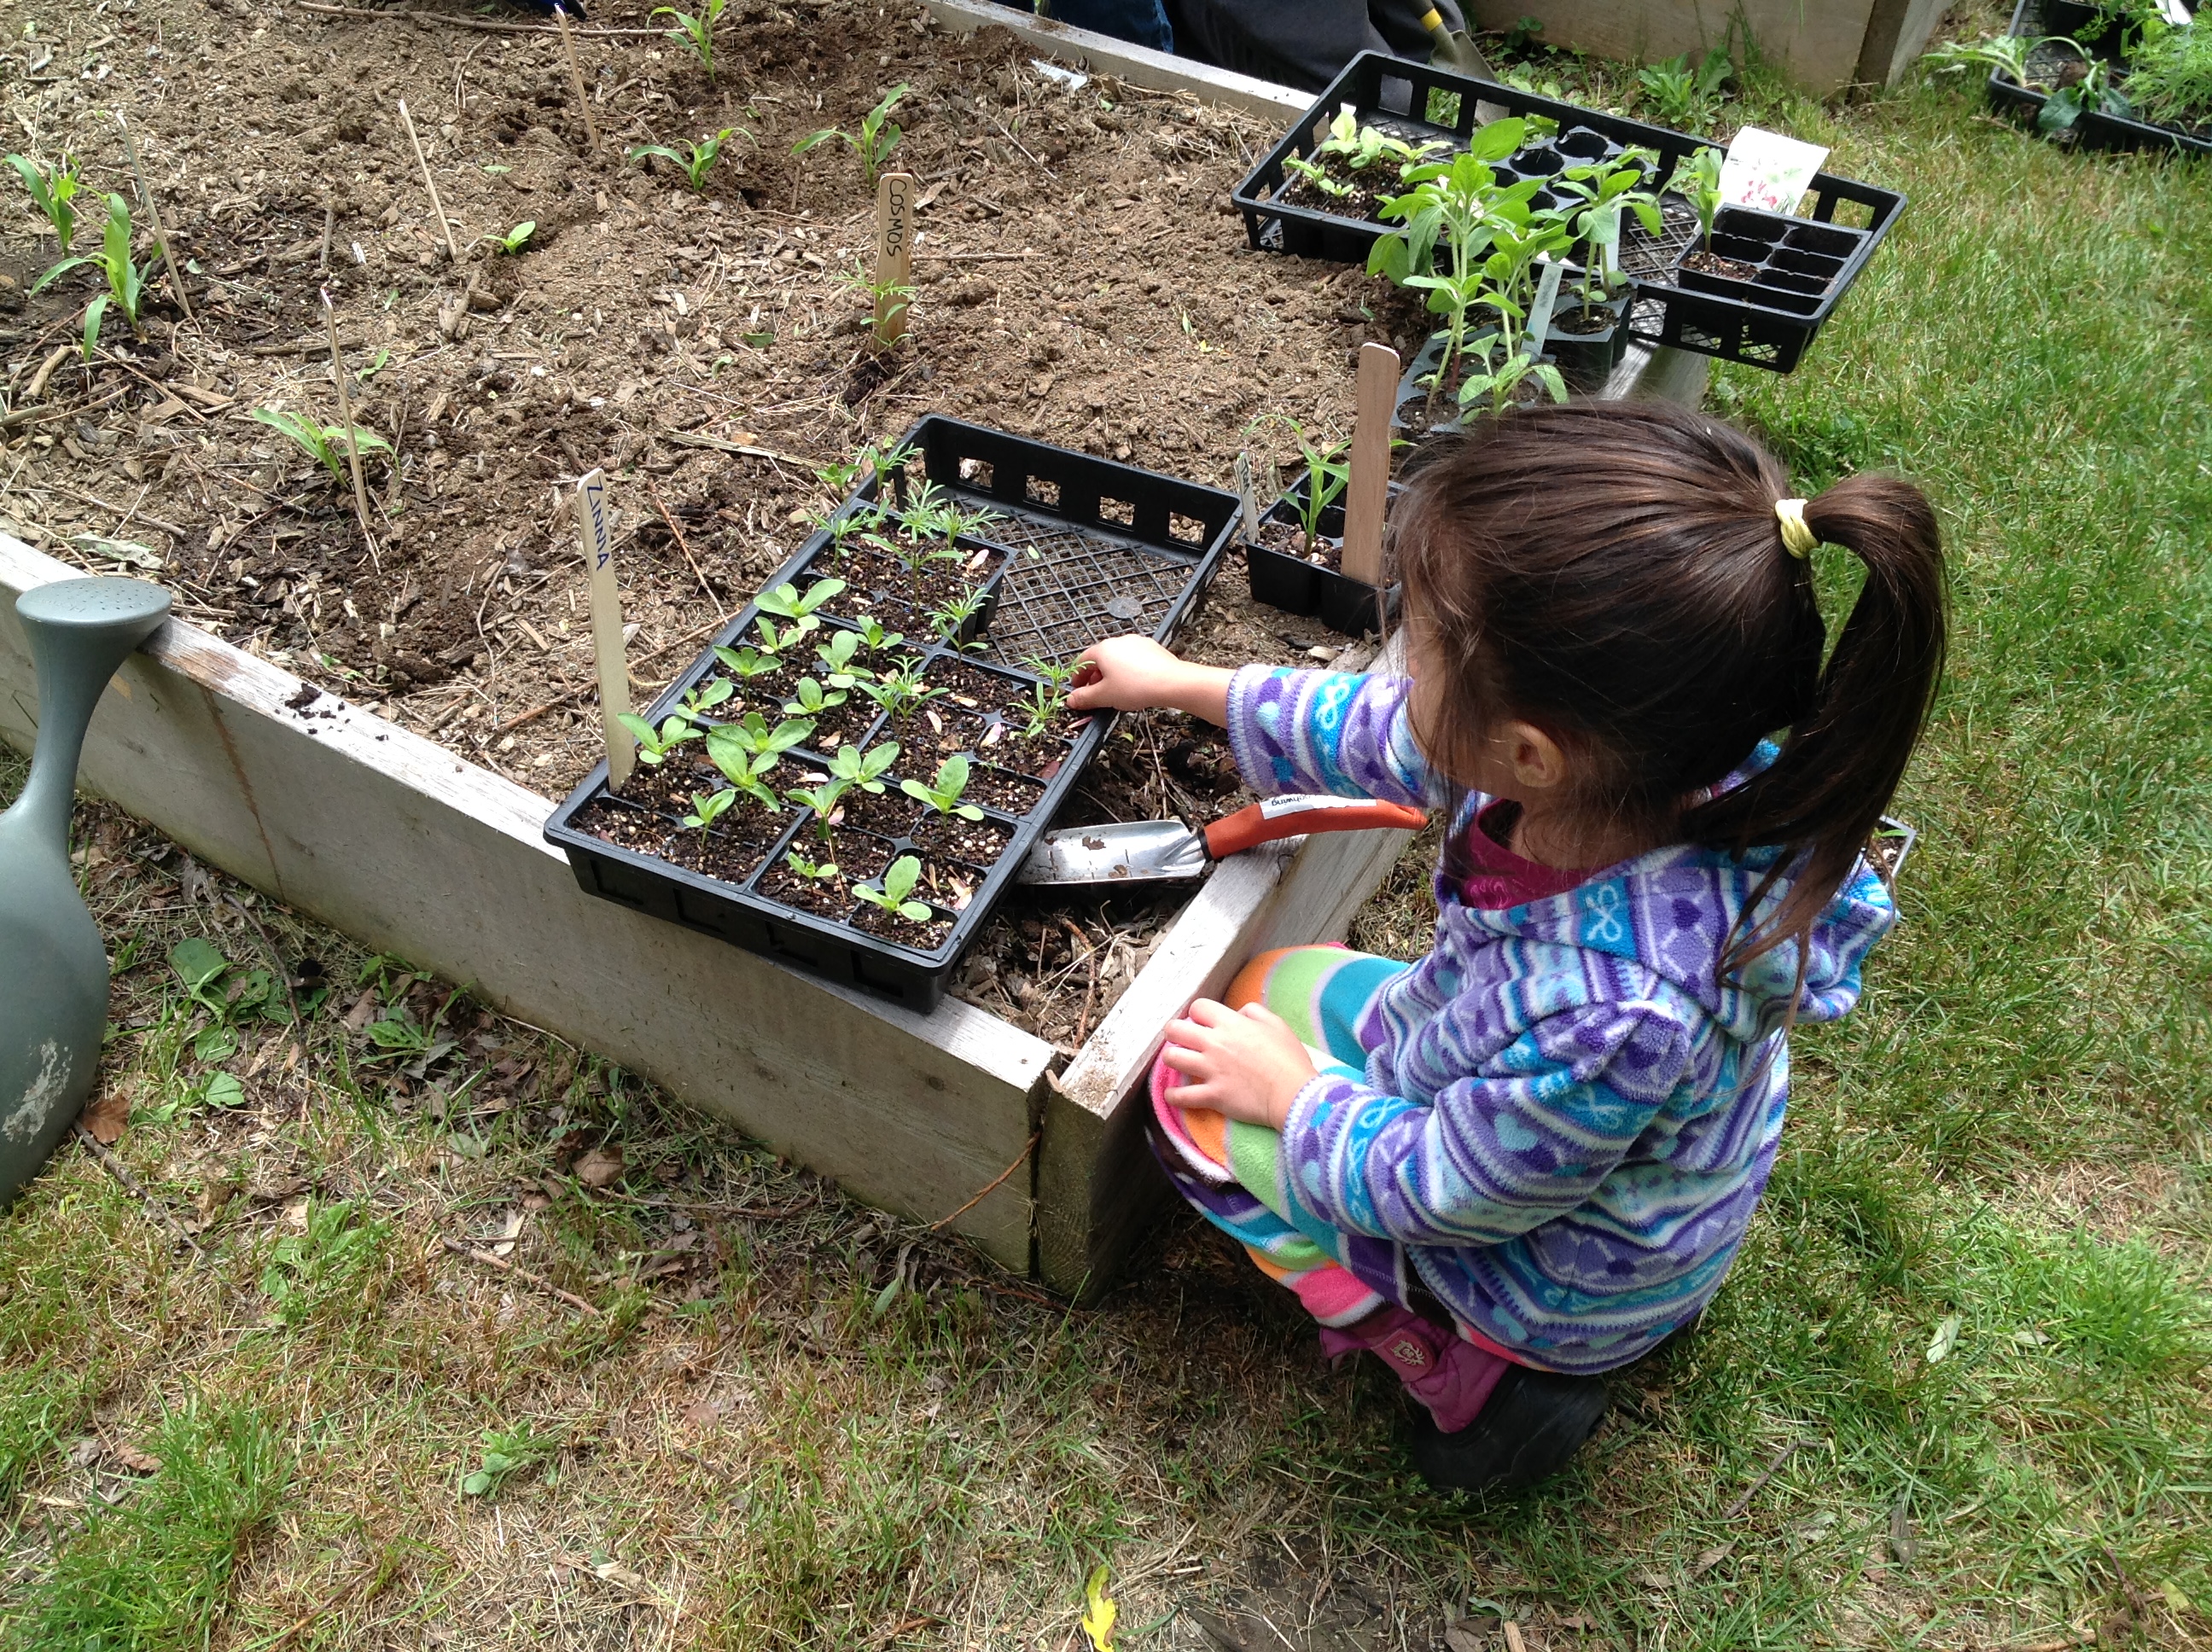 Child planting in garden bed